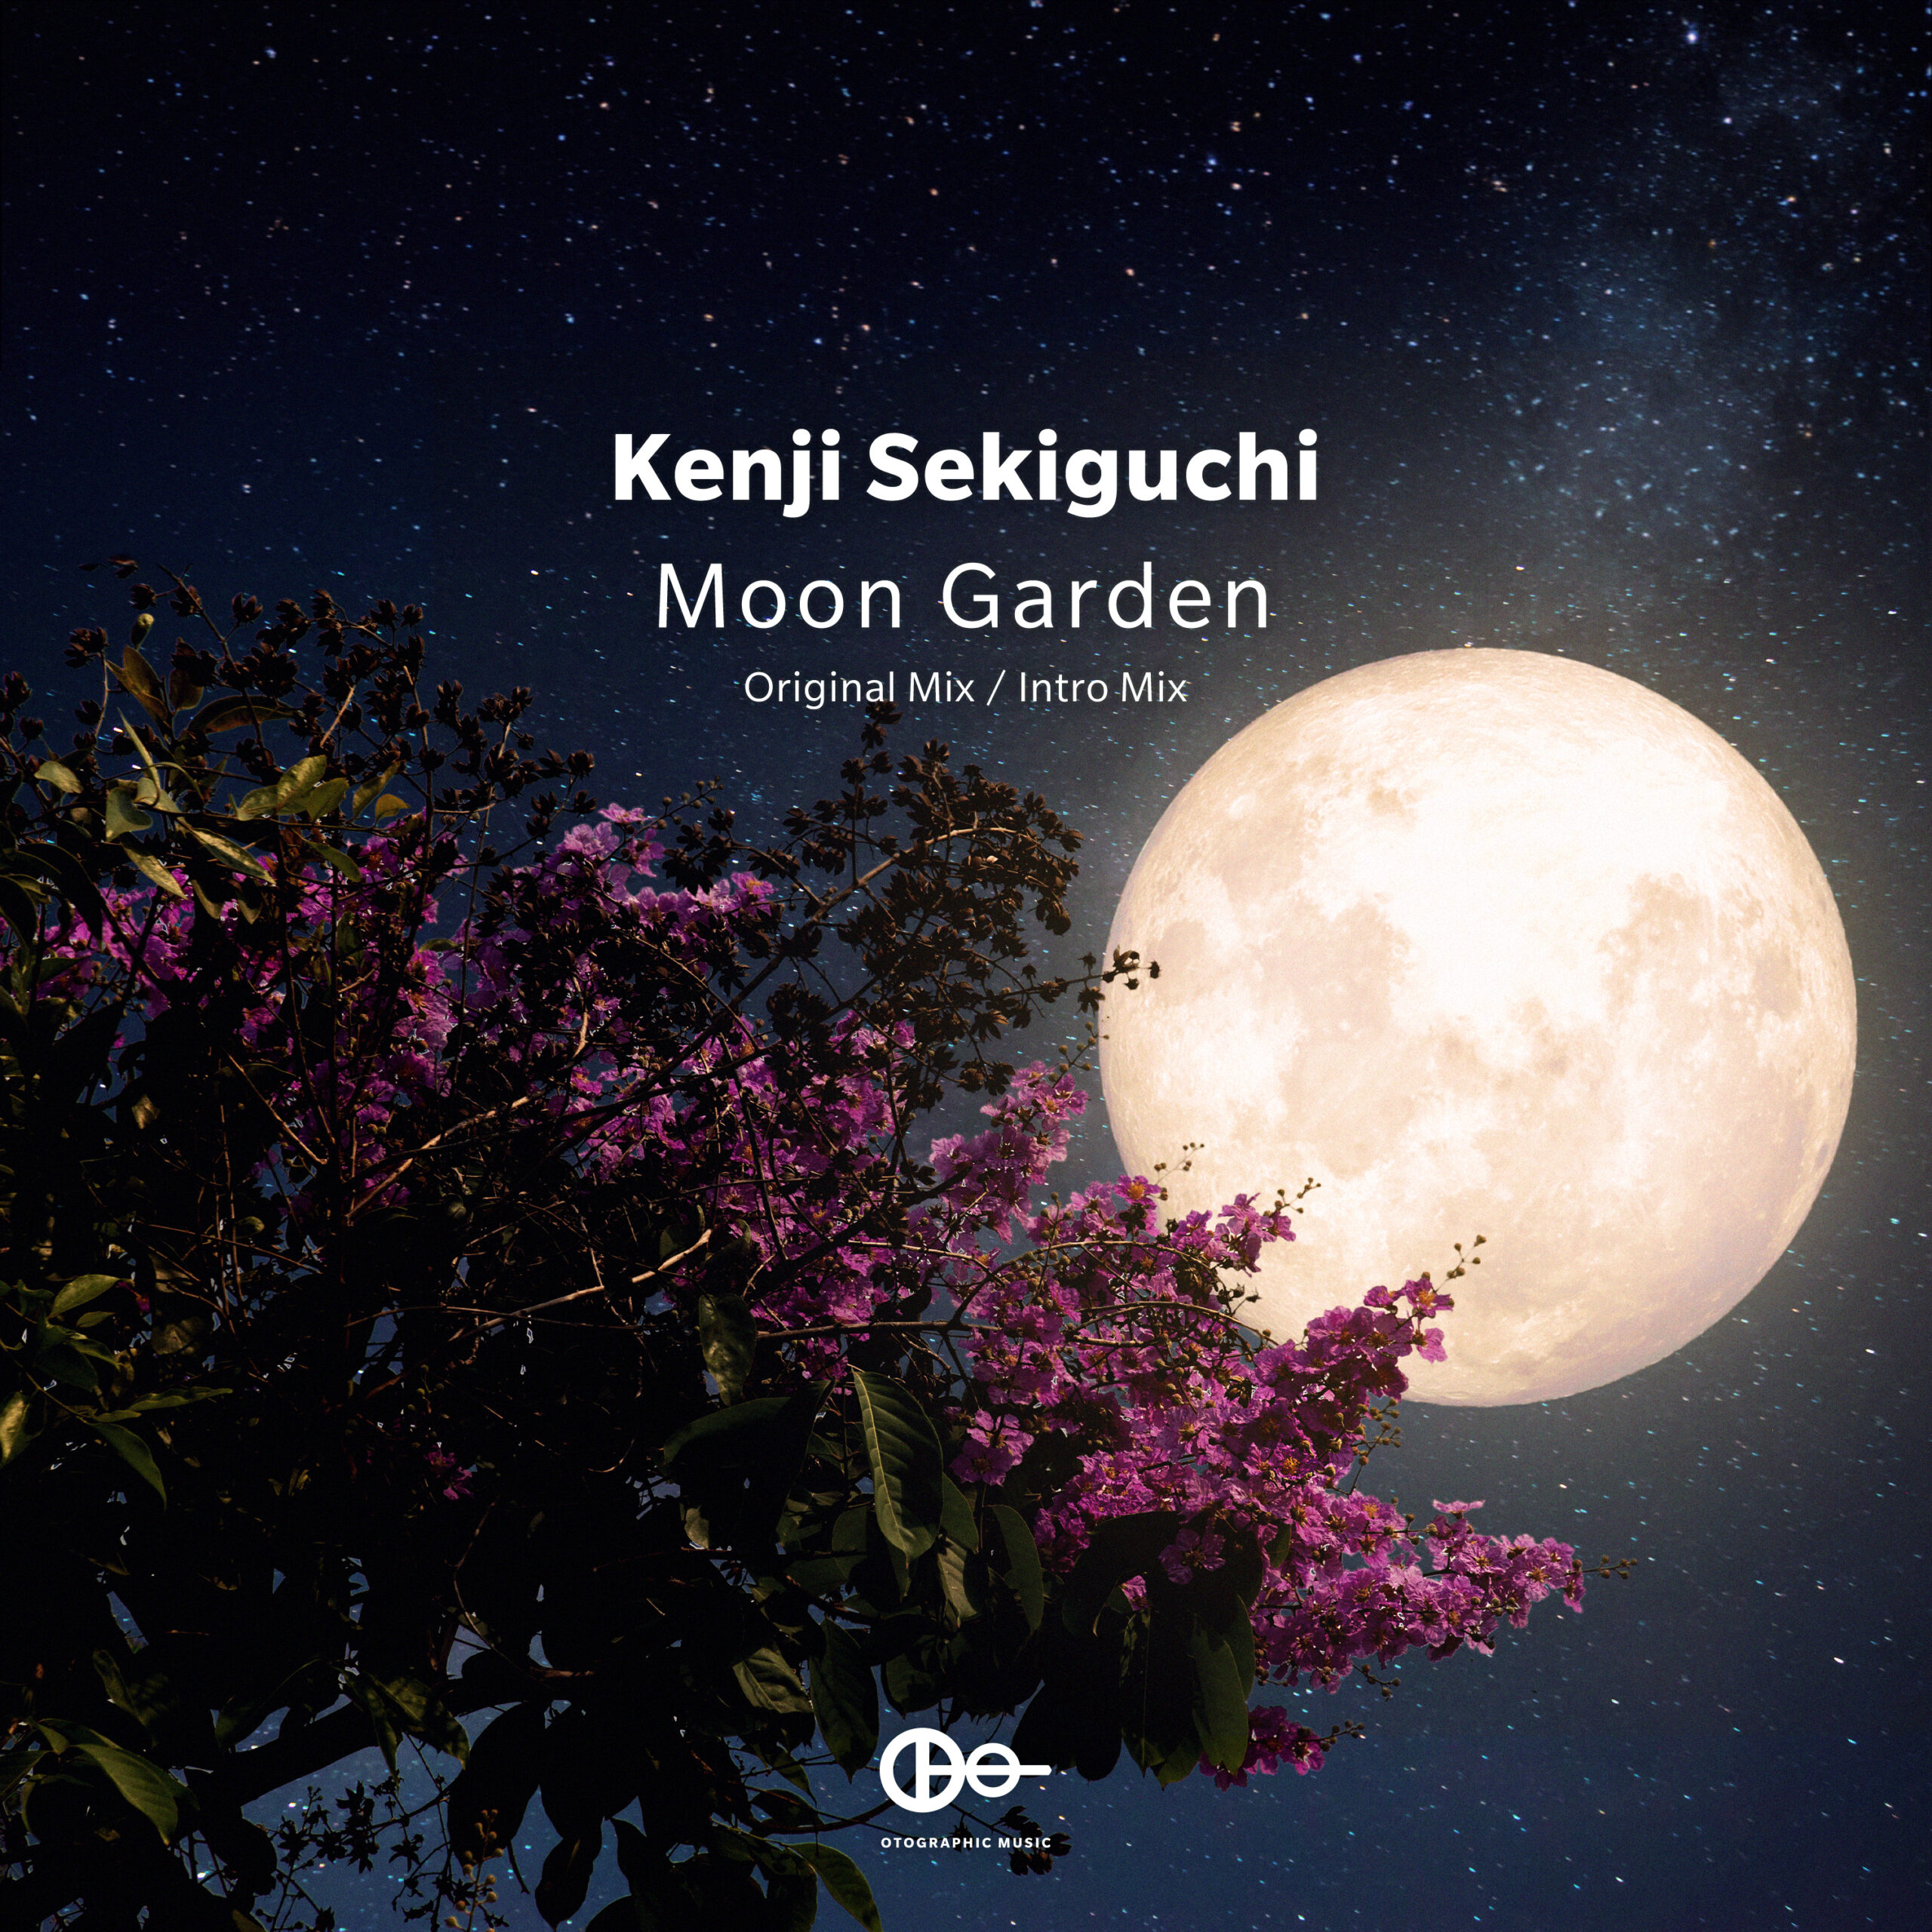 Kenji Sekiguchi “Moon Garden”